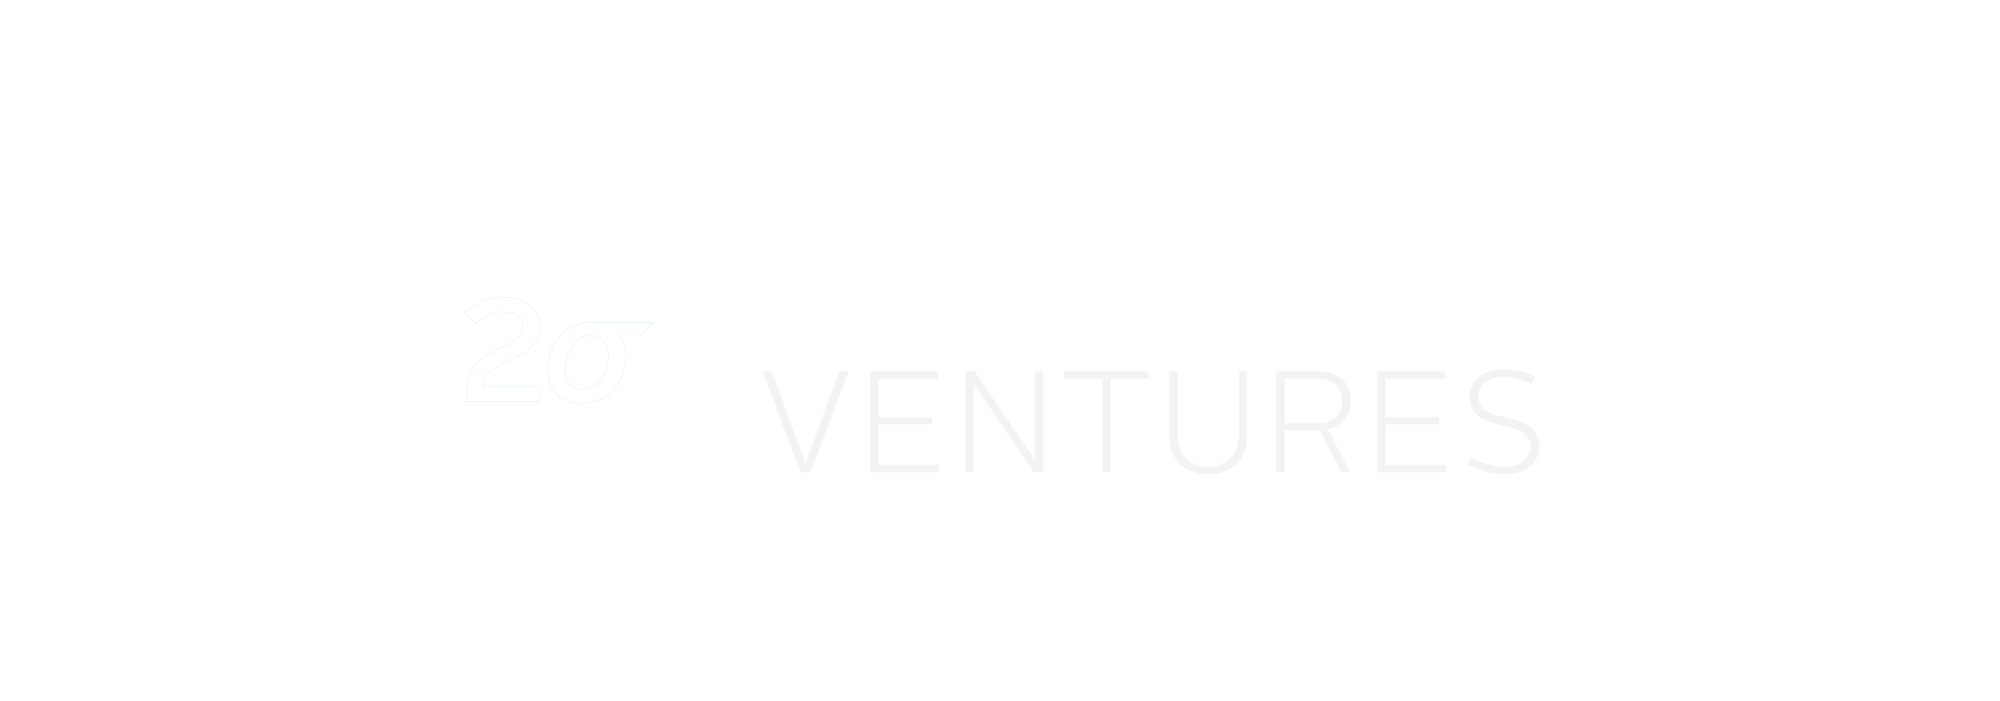 two sigma ventures logo